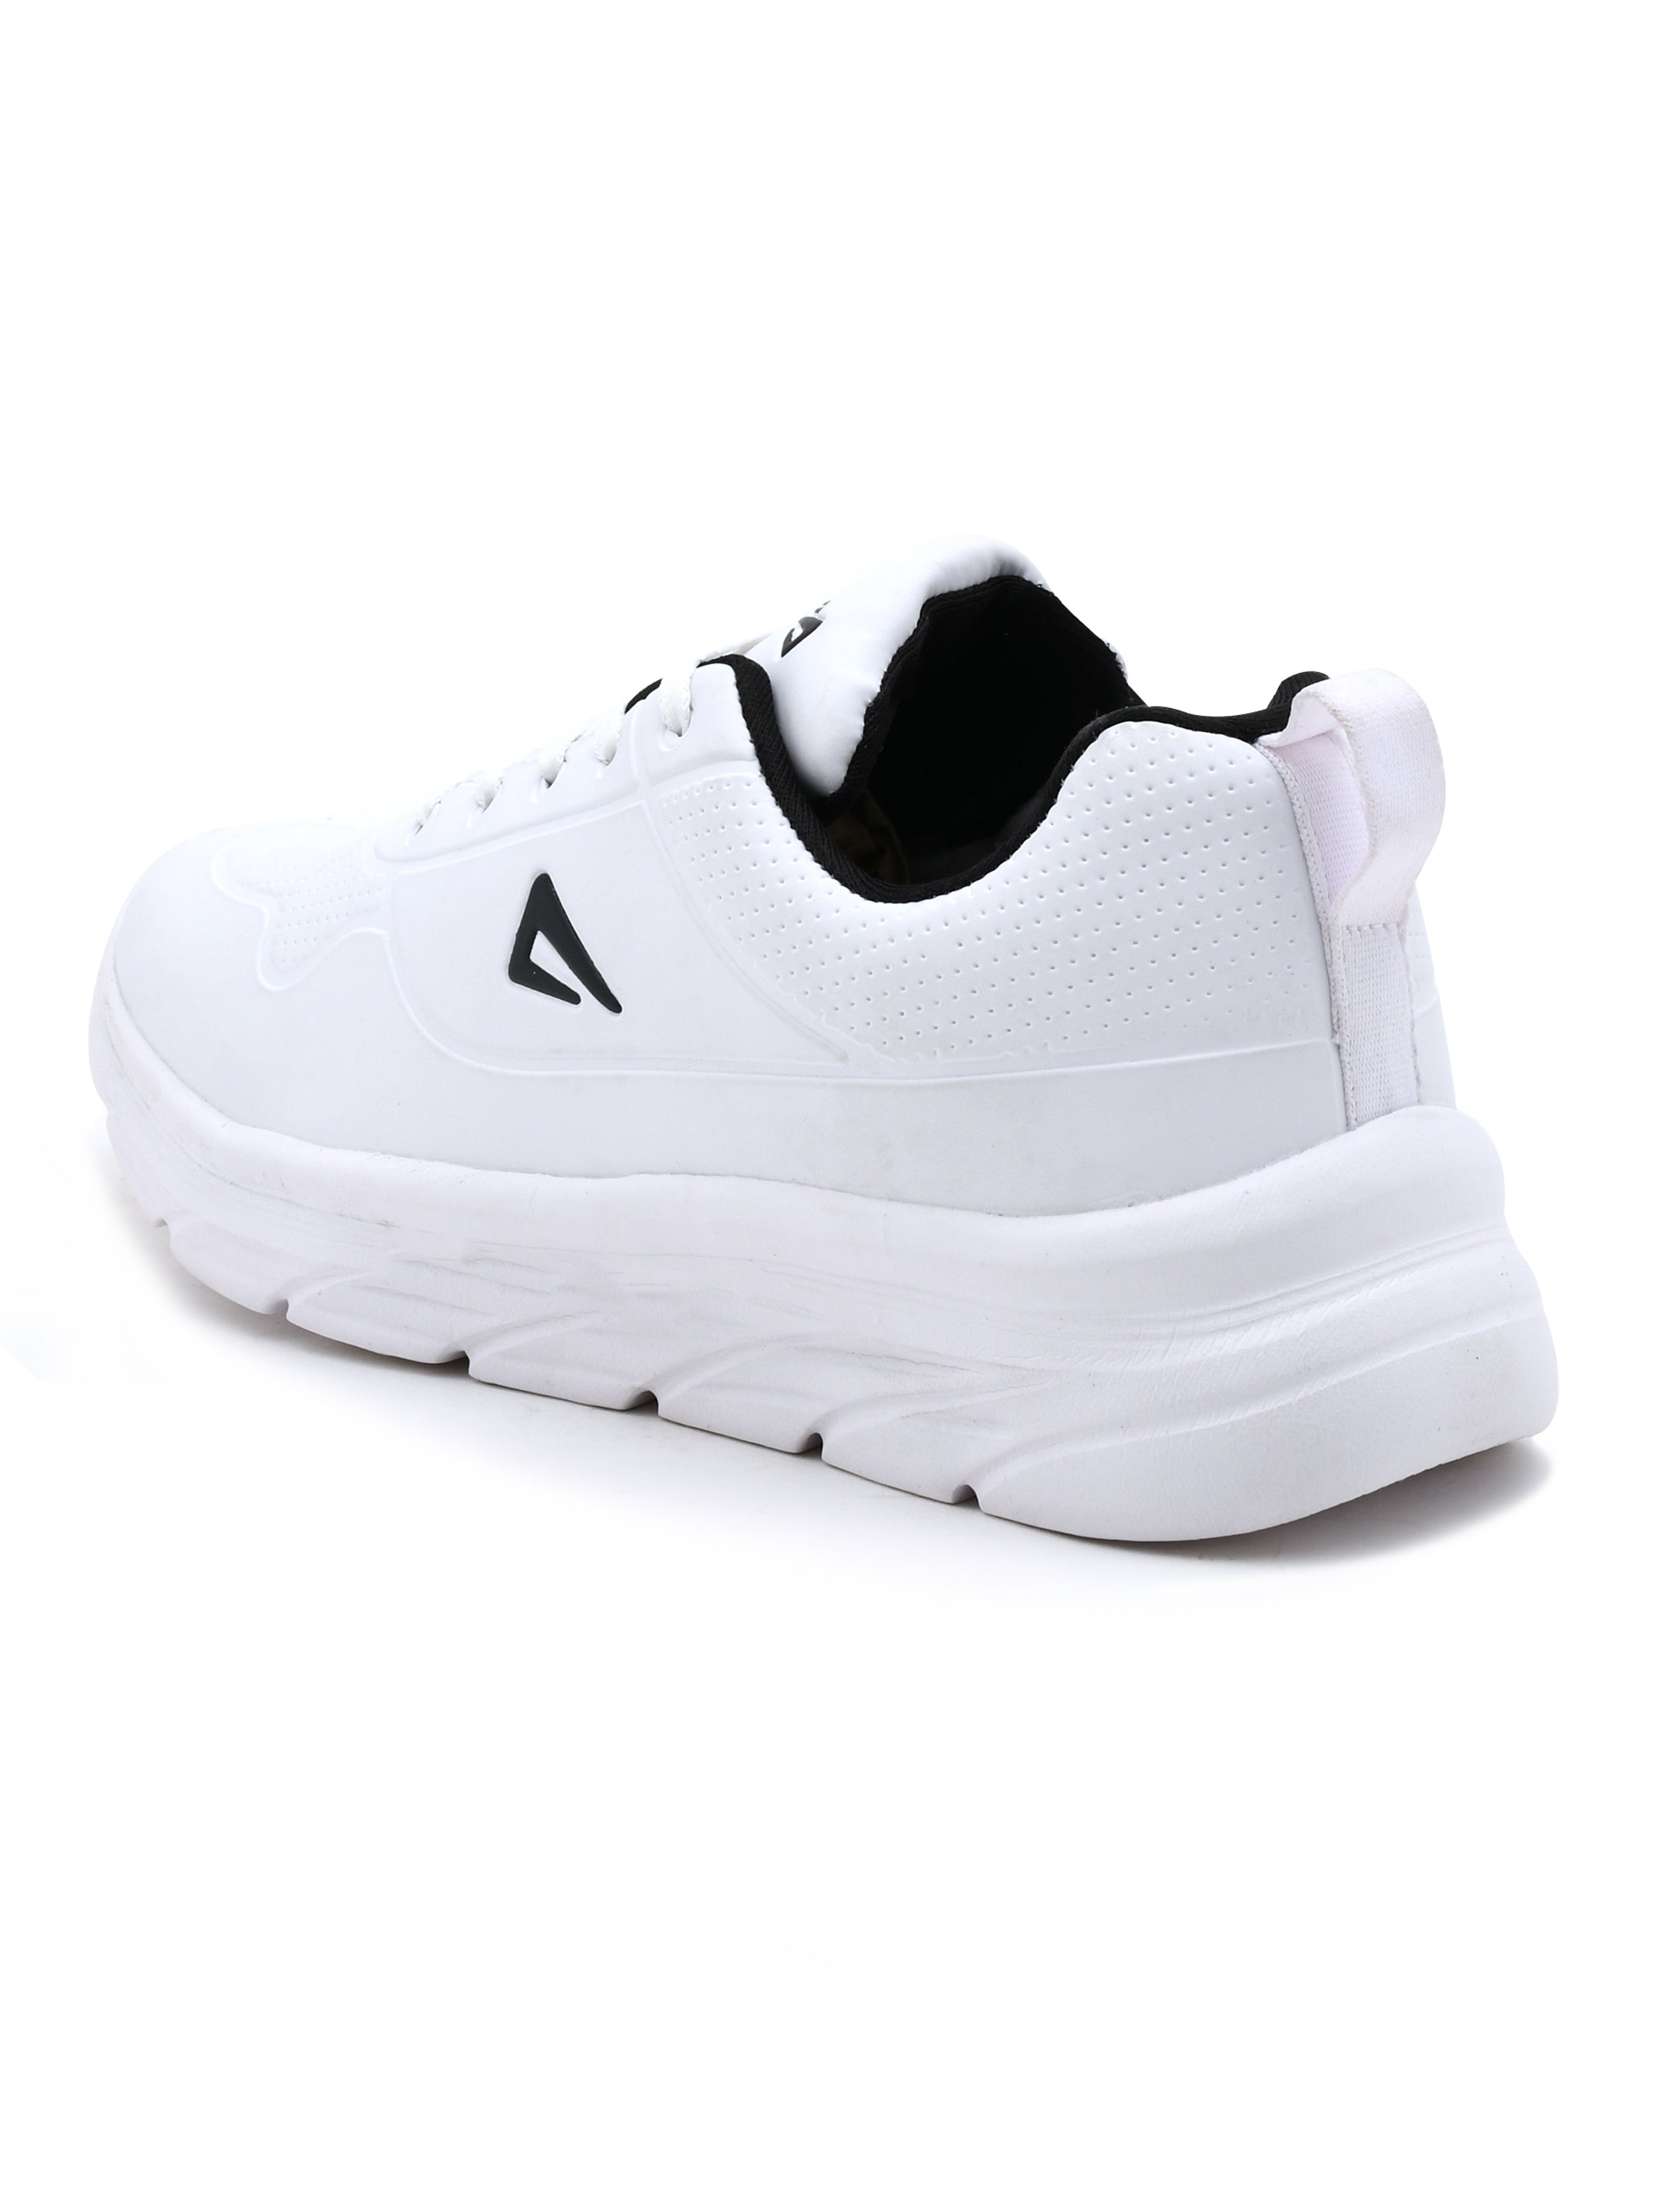 Impakto  Disruptor Sport Shoes Men's  White Walking Shoes